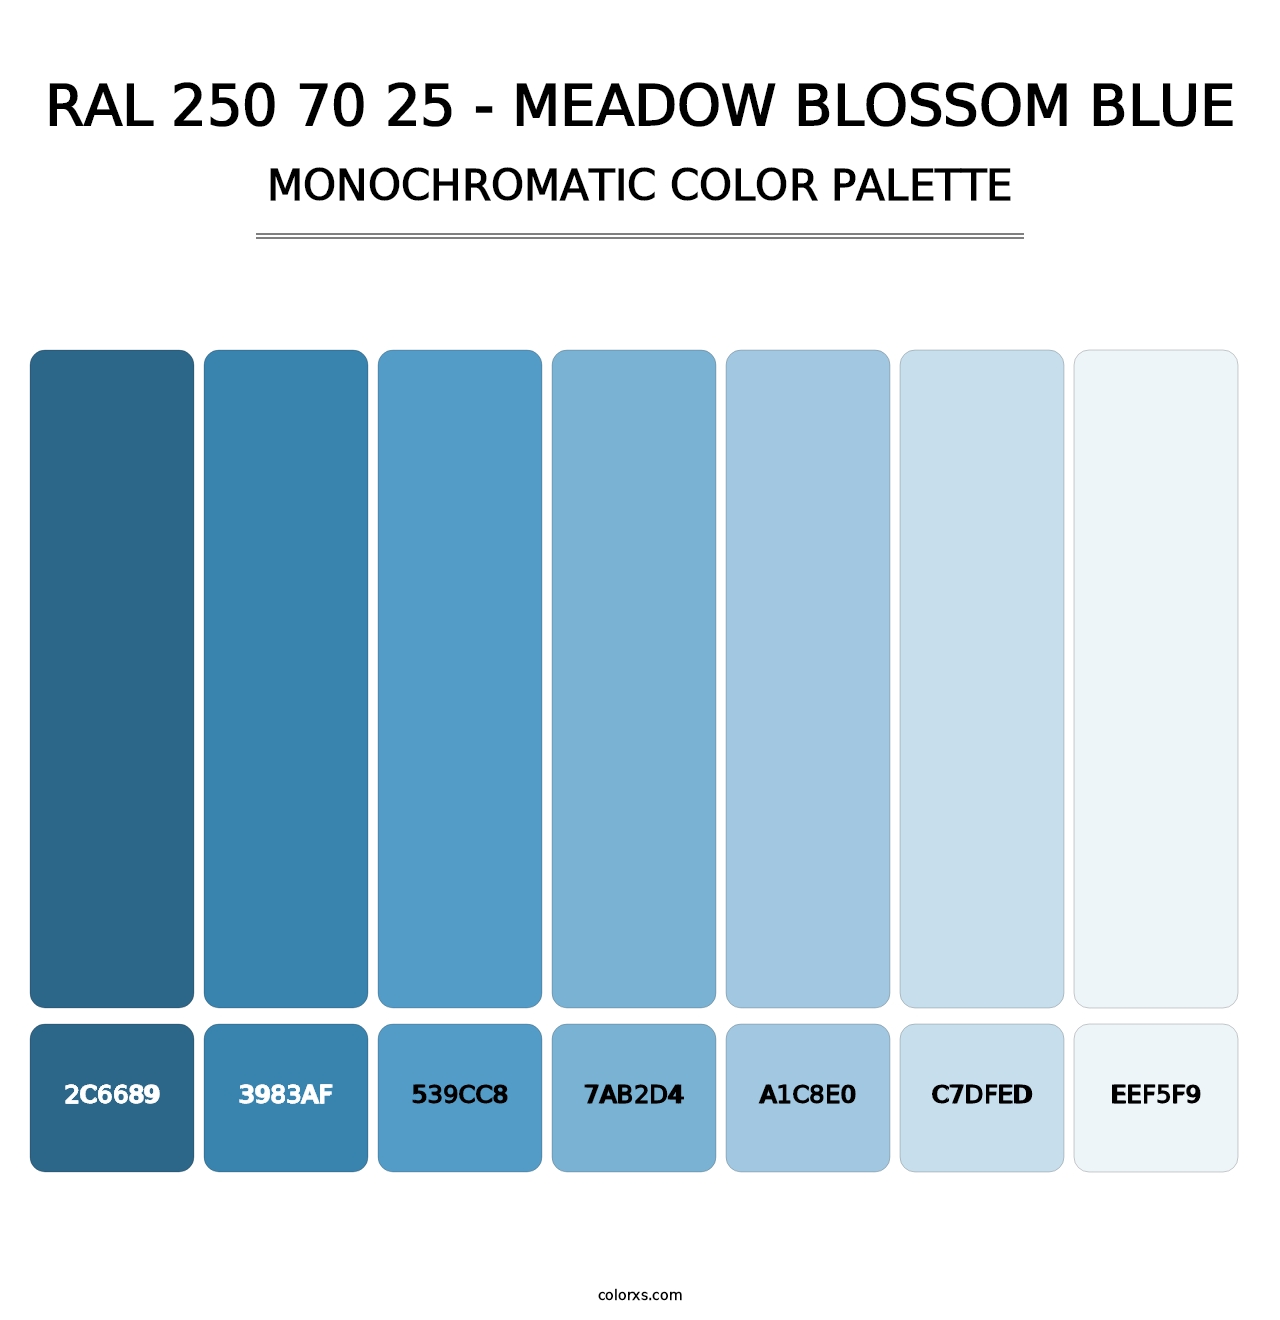 RAL 250 70 25 - Meadow Blossom Blue - Monochromatic Color Palette